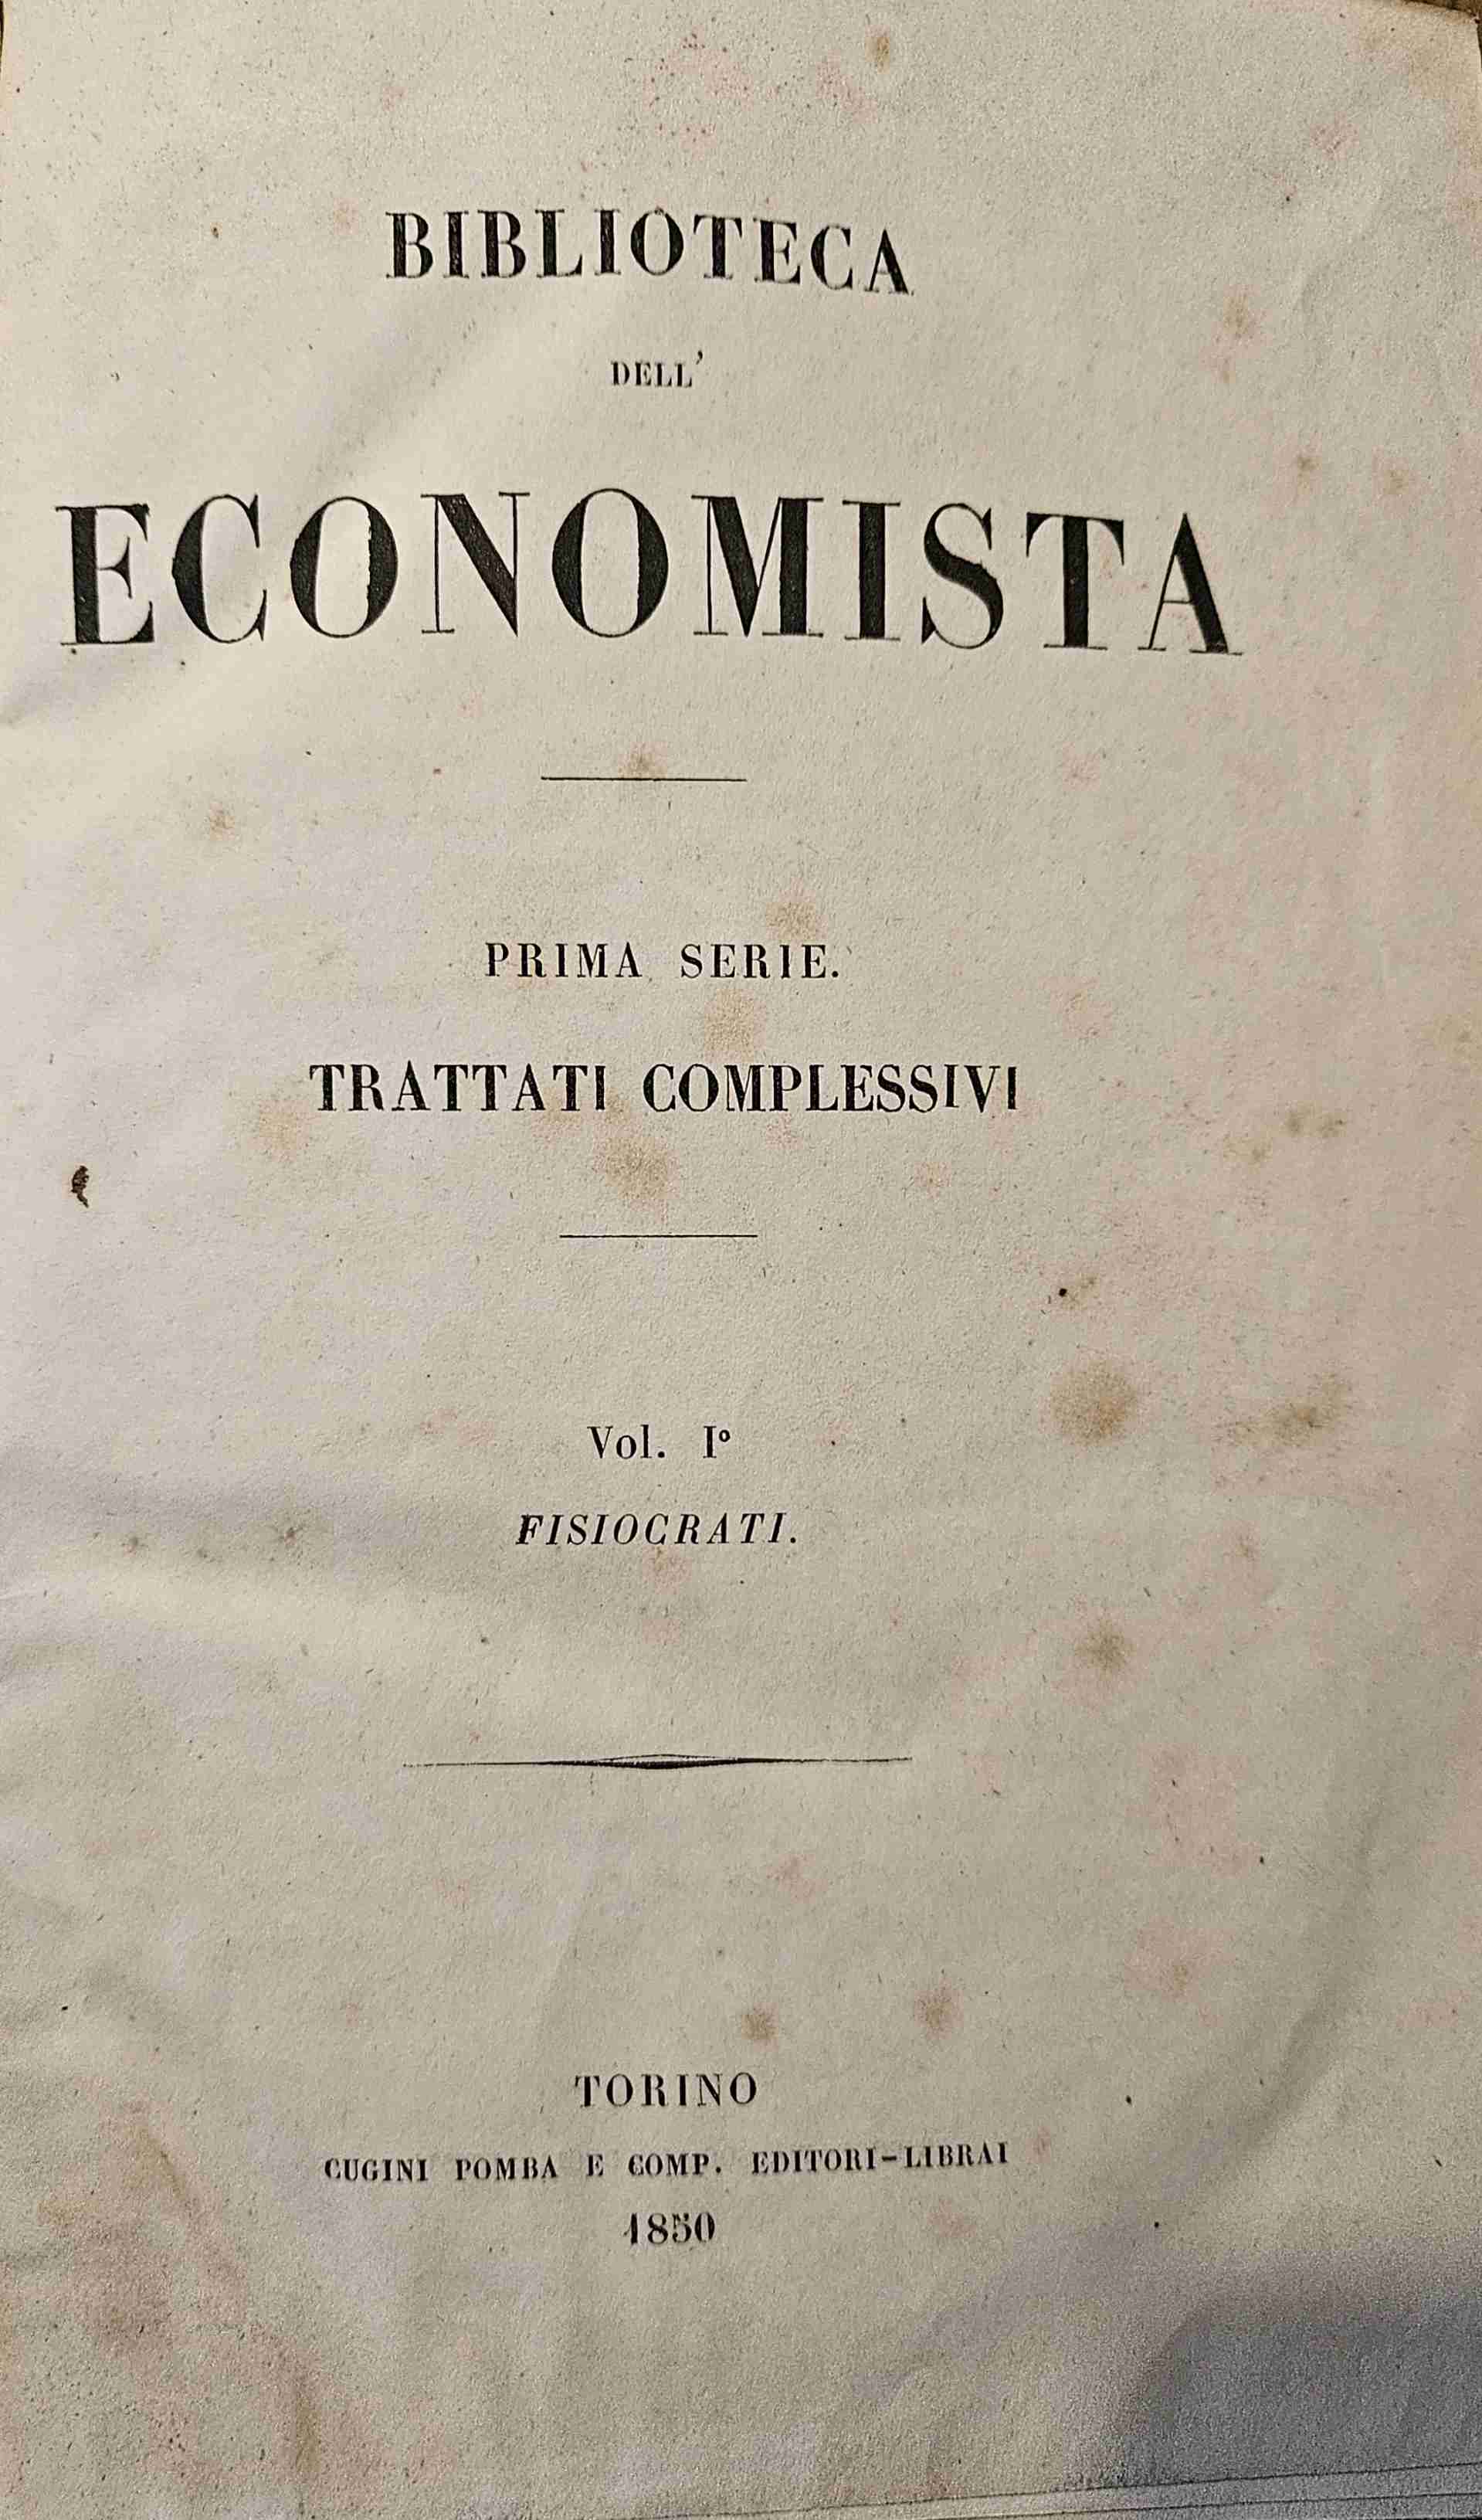 Biblioteca dell'economista prima serie 12 tomi